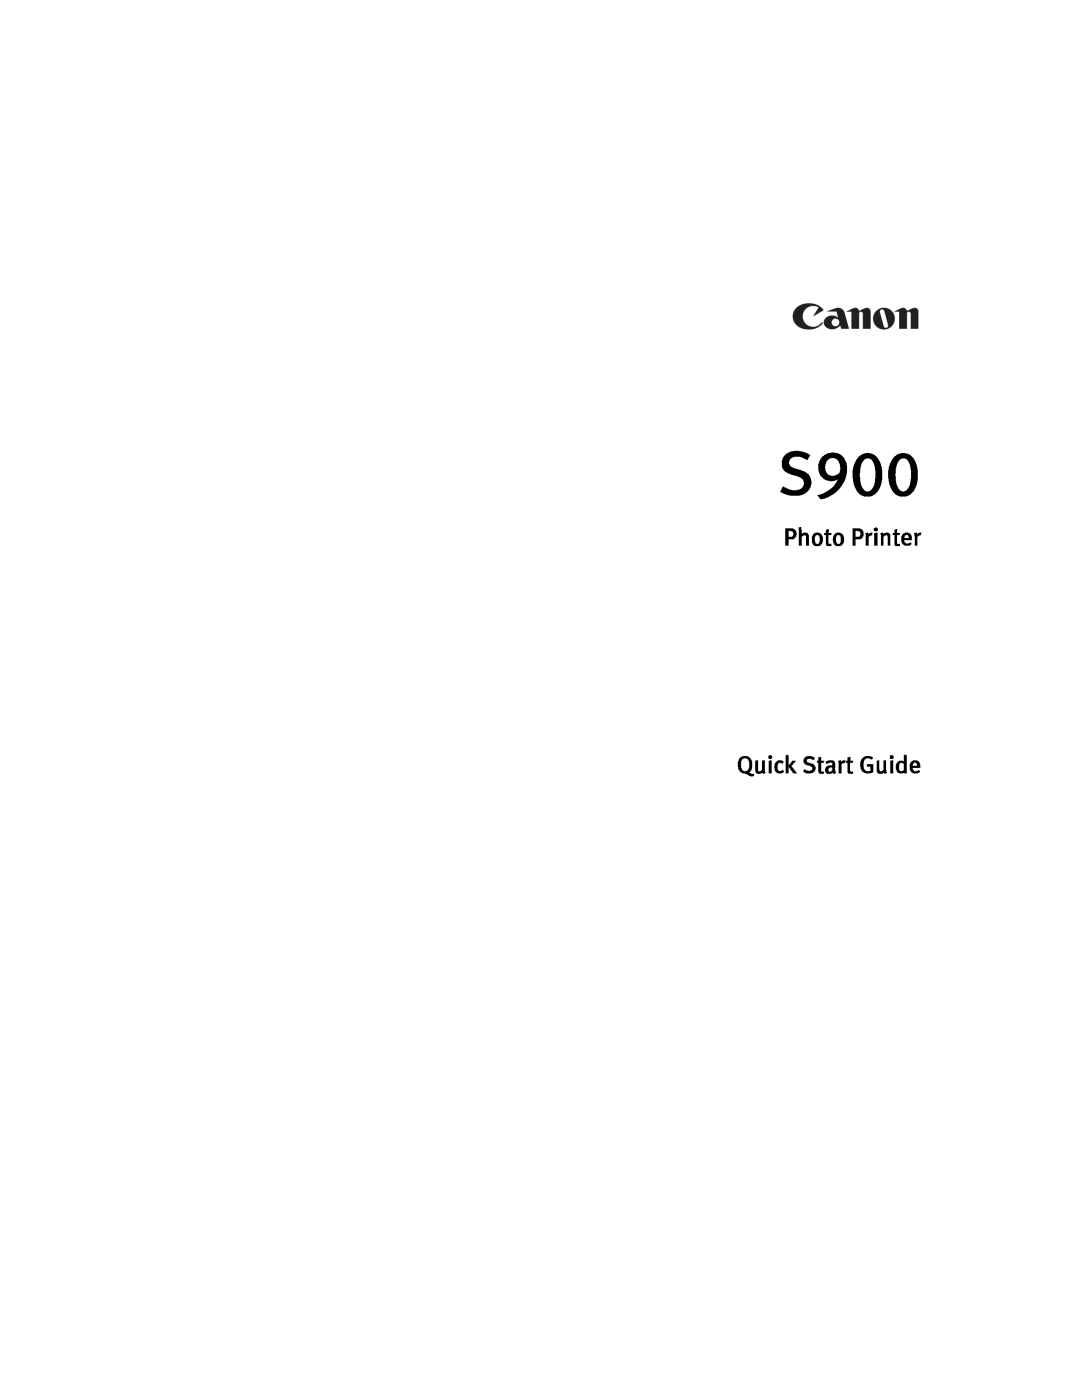 Canon S900 quick start Photo Printer Quick Start Guide 